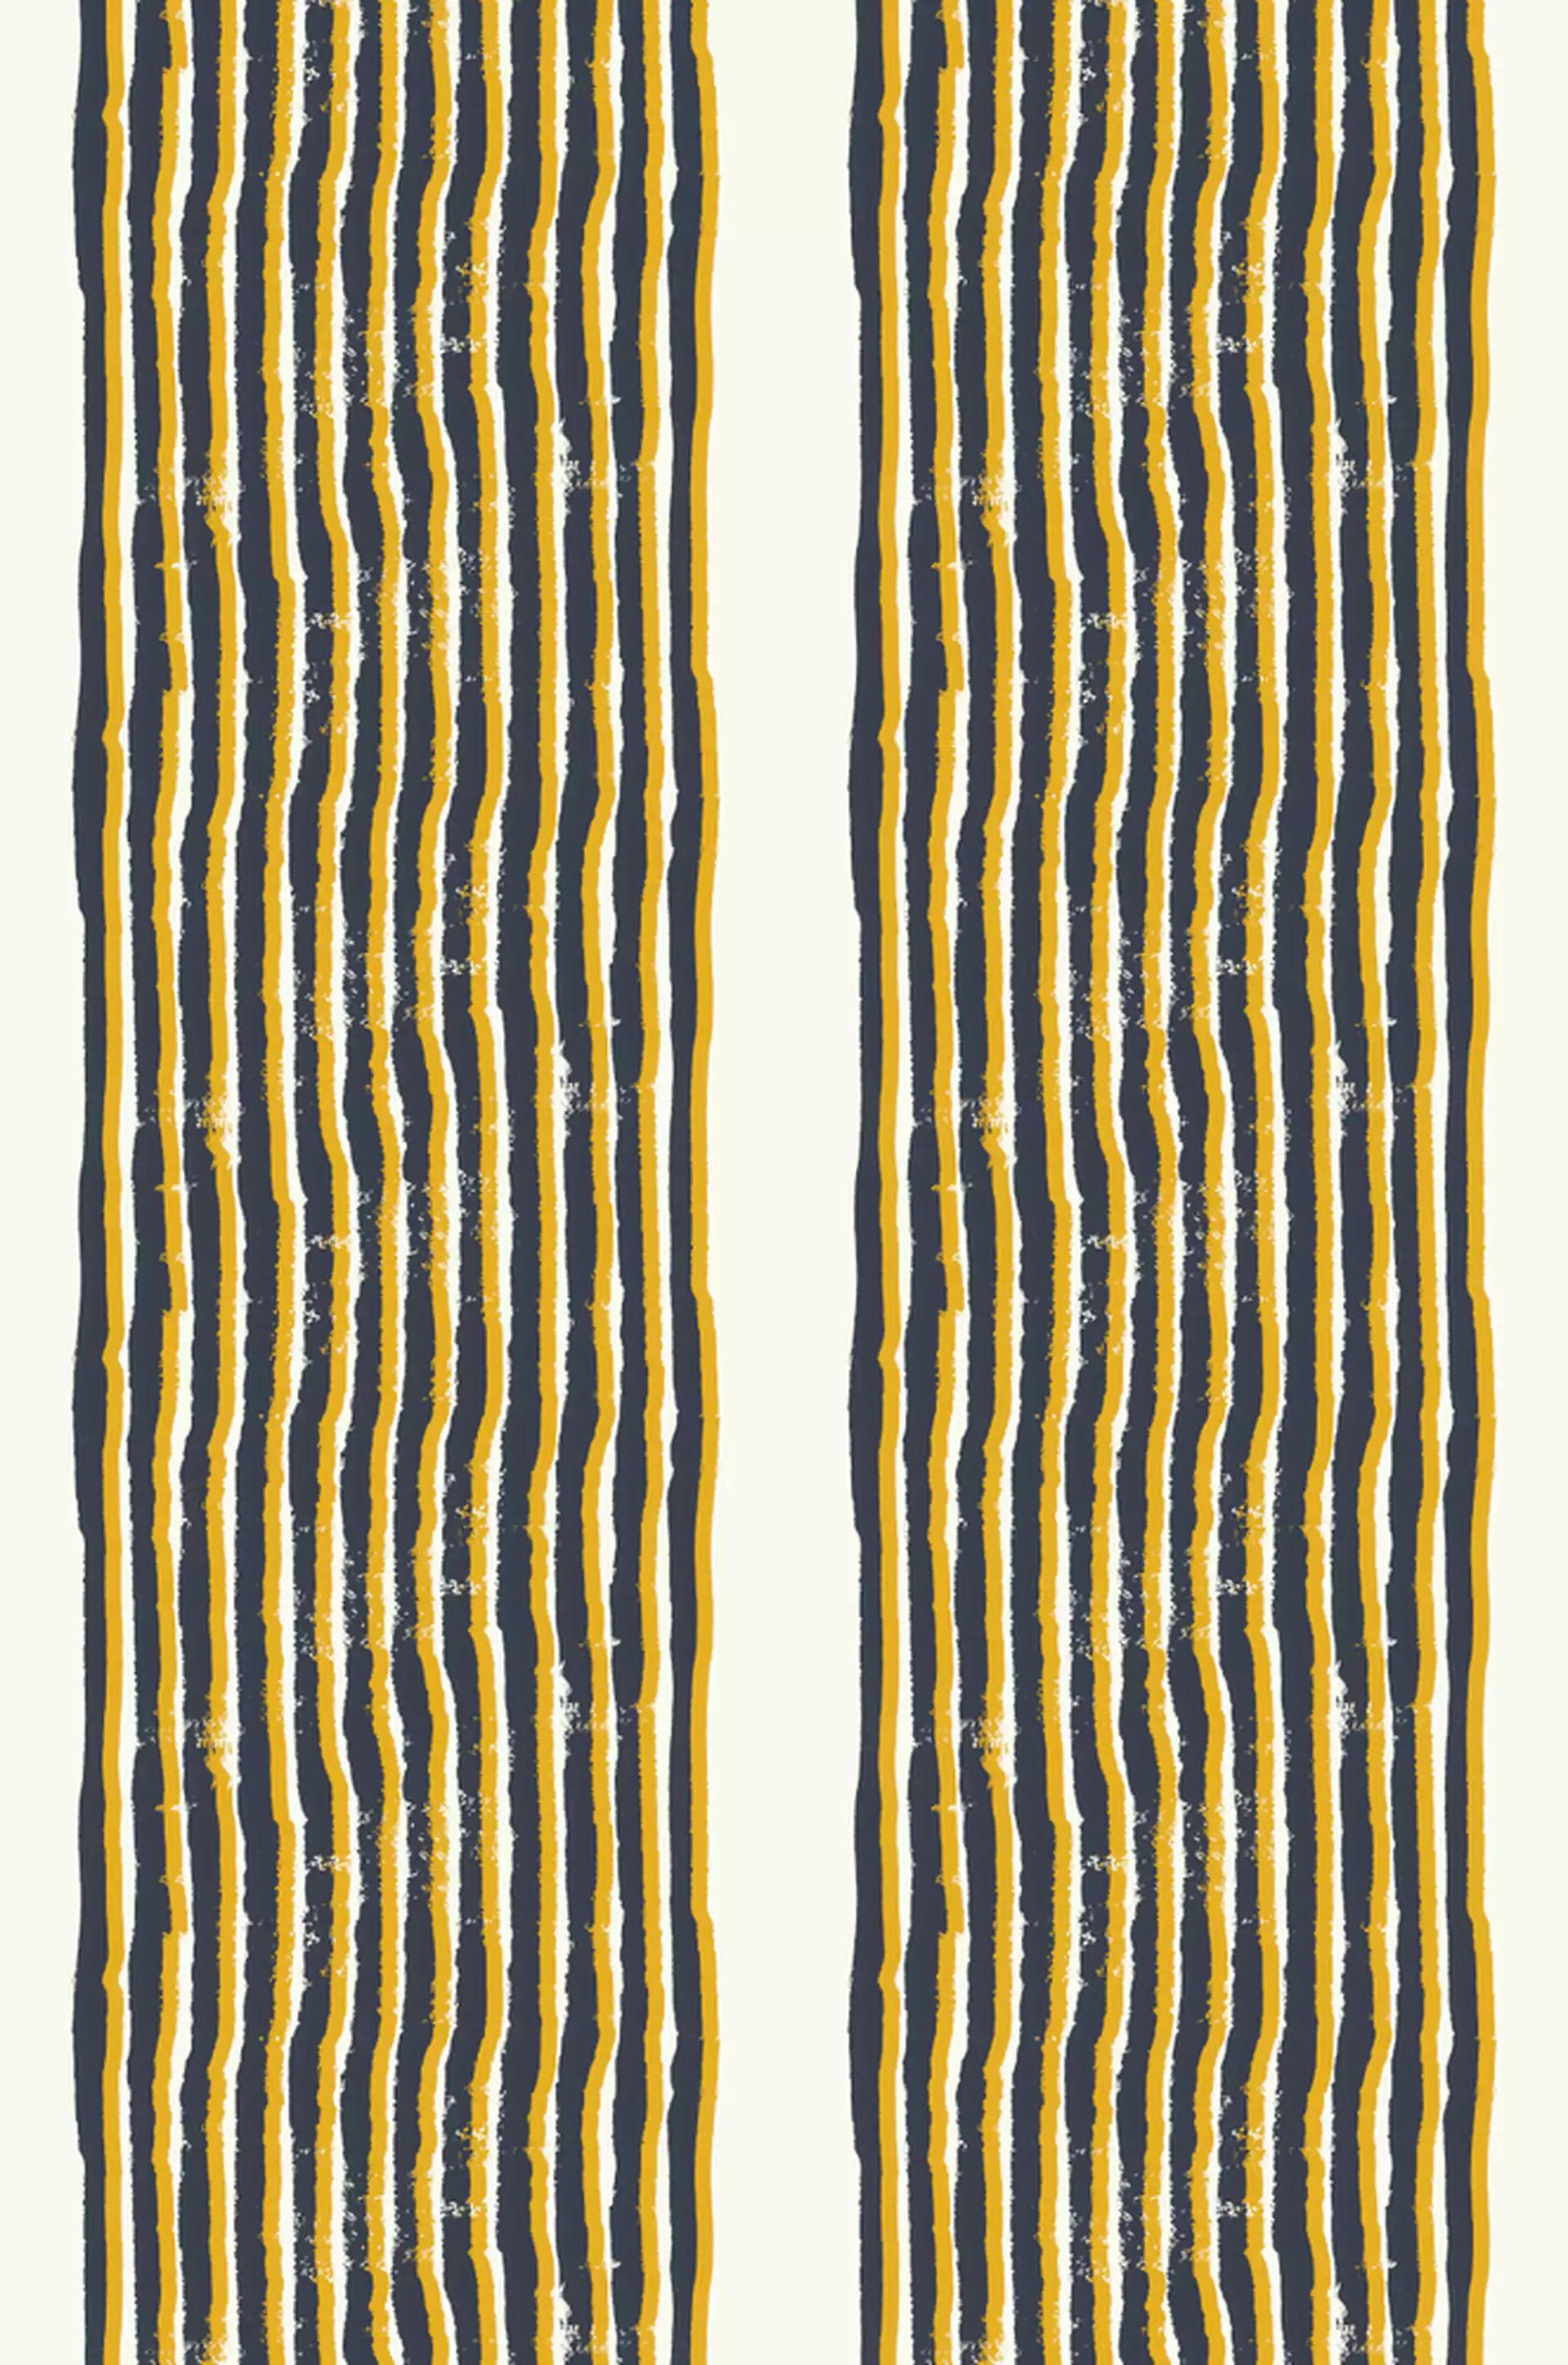 Zen Stripe Block Print Mustard Couch Throw Pillow by Becky Bailey - Cover (20" x 20") with pillow insert - Outdoor Pillow